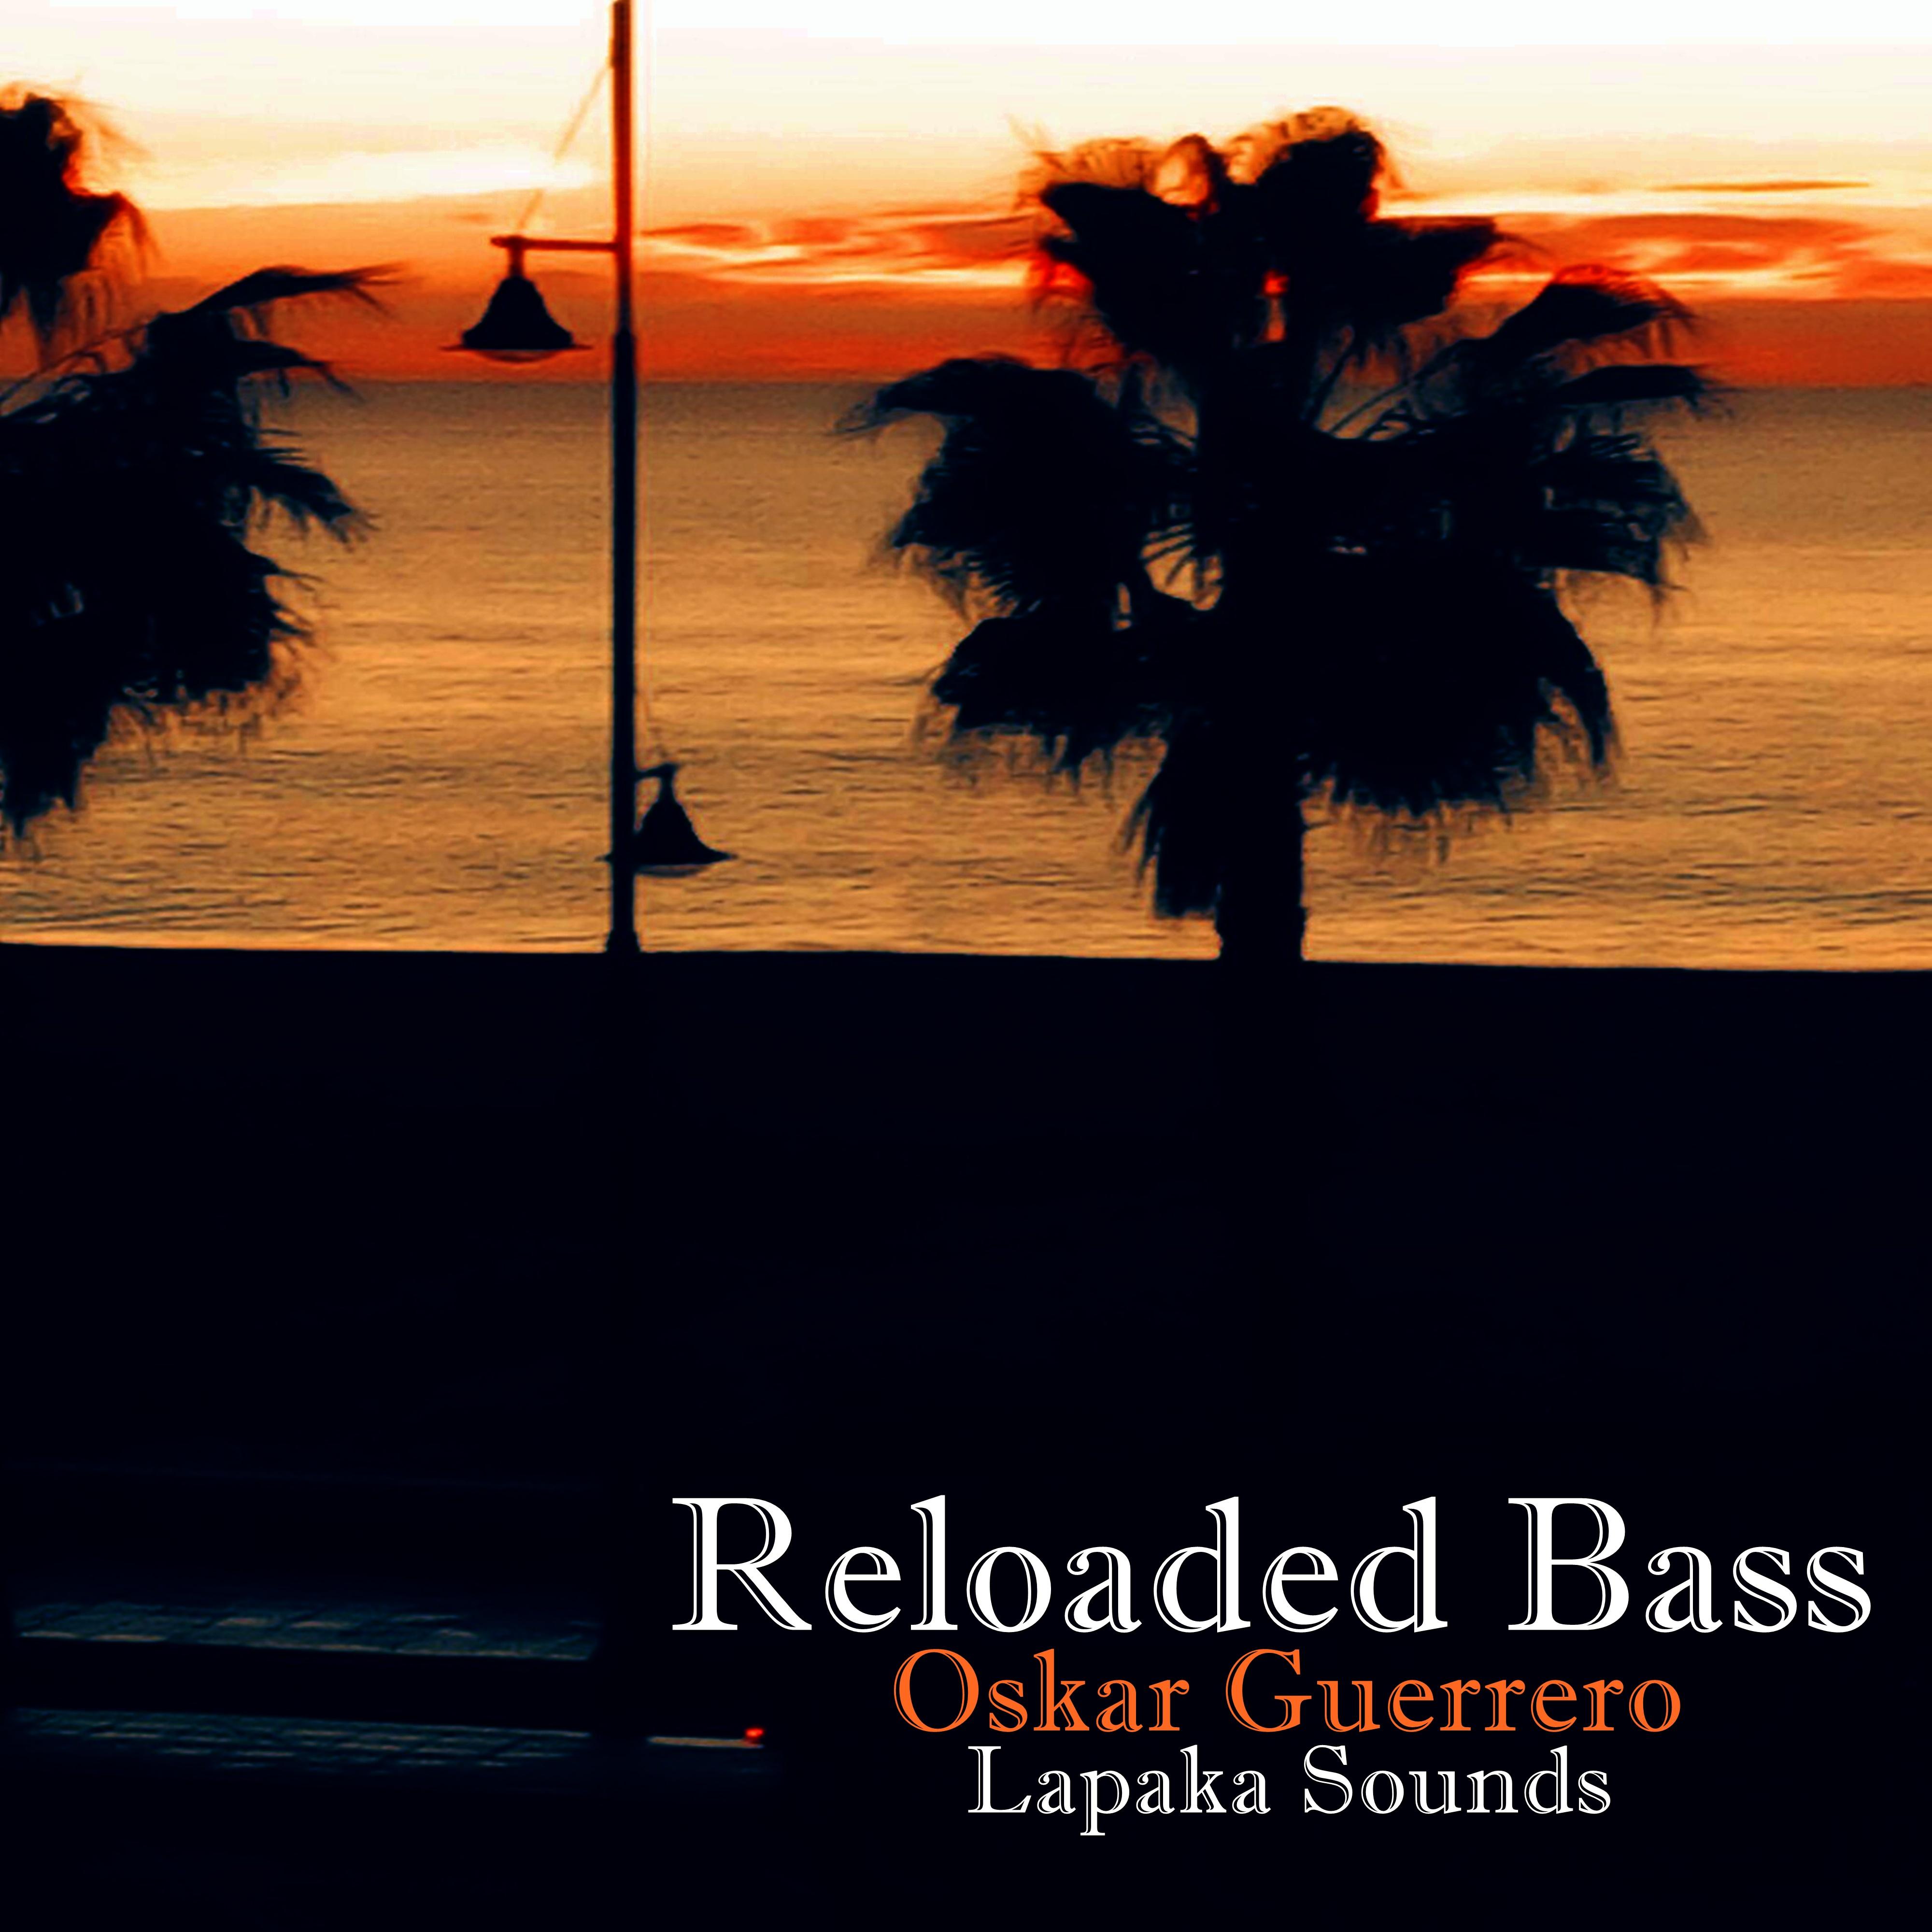 Reloaded Bass